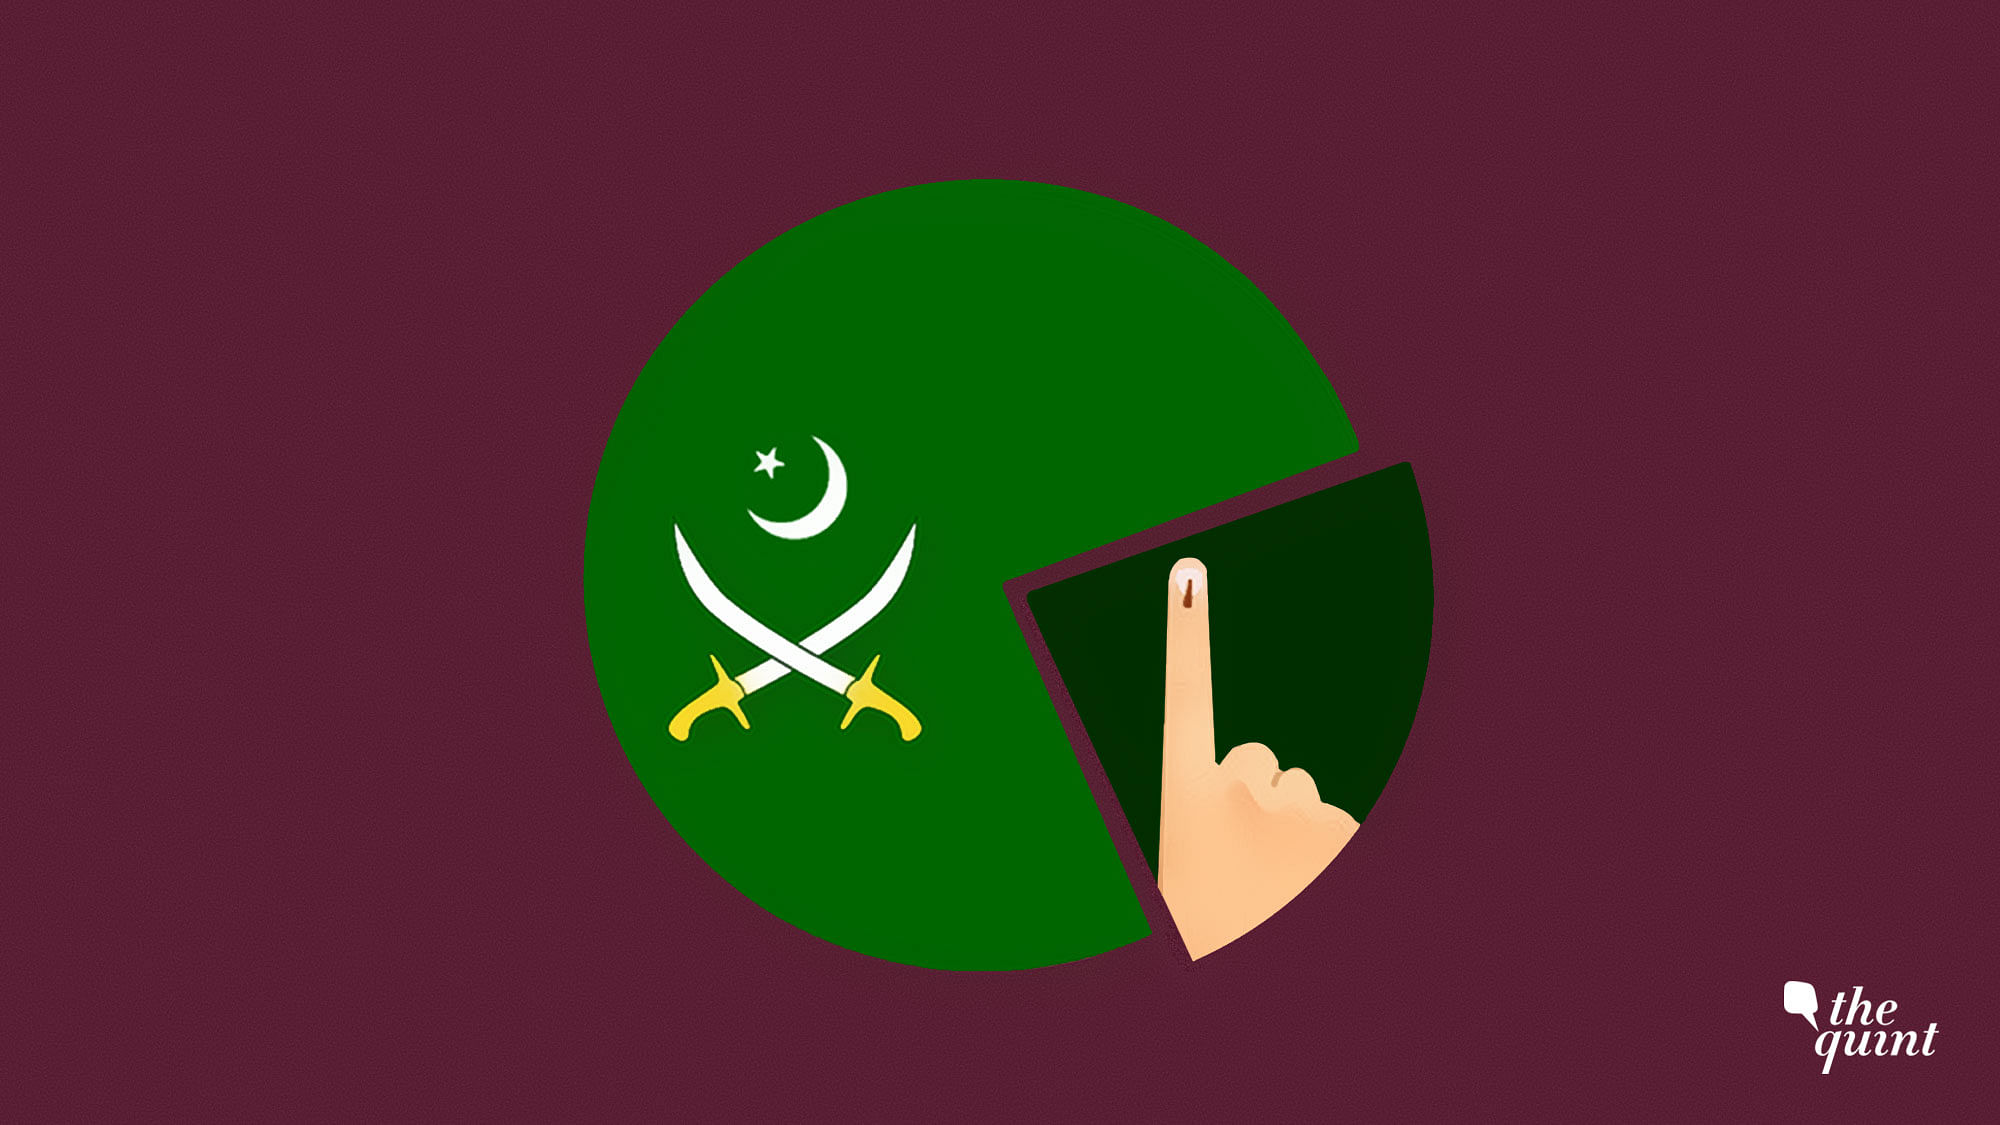 Pakistani Army’s symbol used for representational purposes.